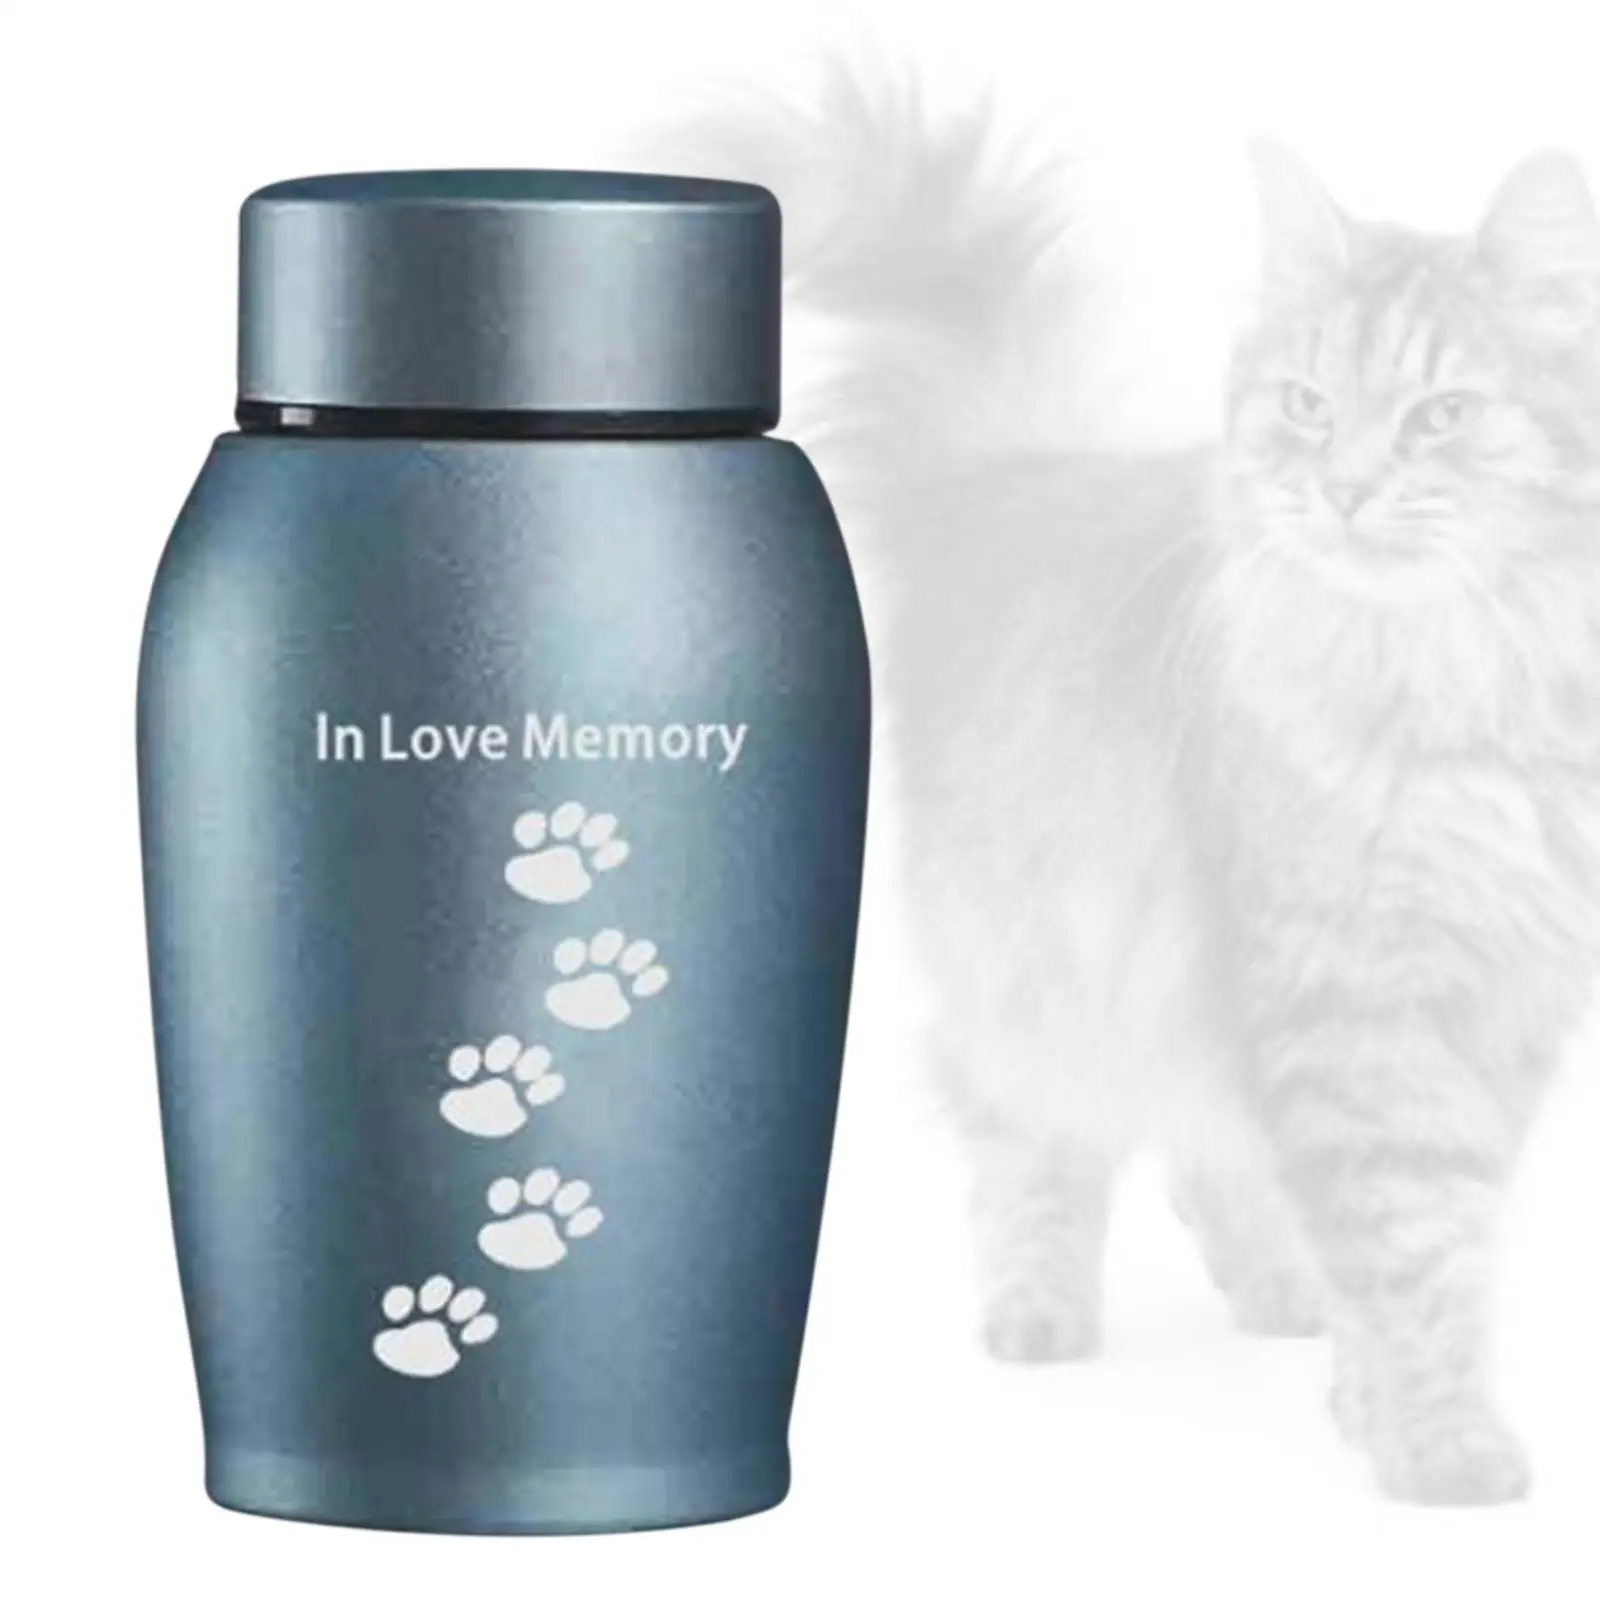 Pet Urns Keepsake Case Memory Loose Memorial Pets Gift Organizer Casket Cremation Memorial Urn for Keeping Precious Small Animal